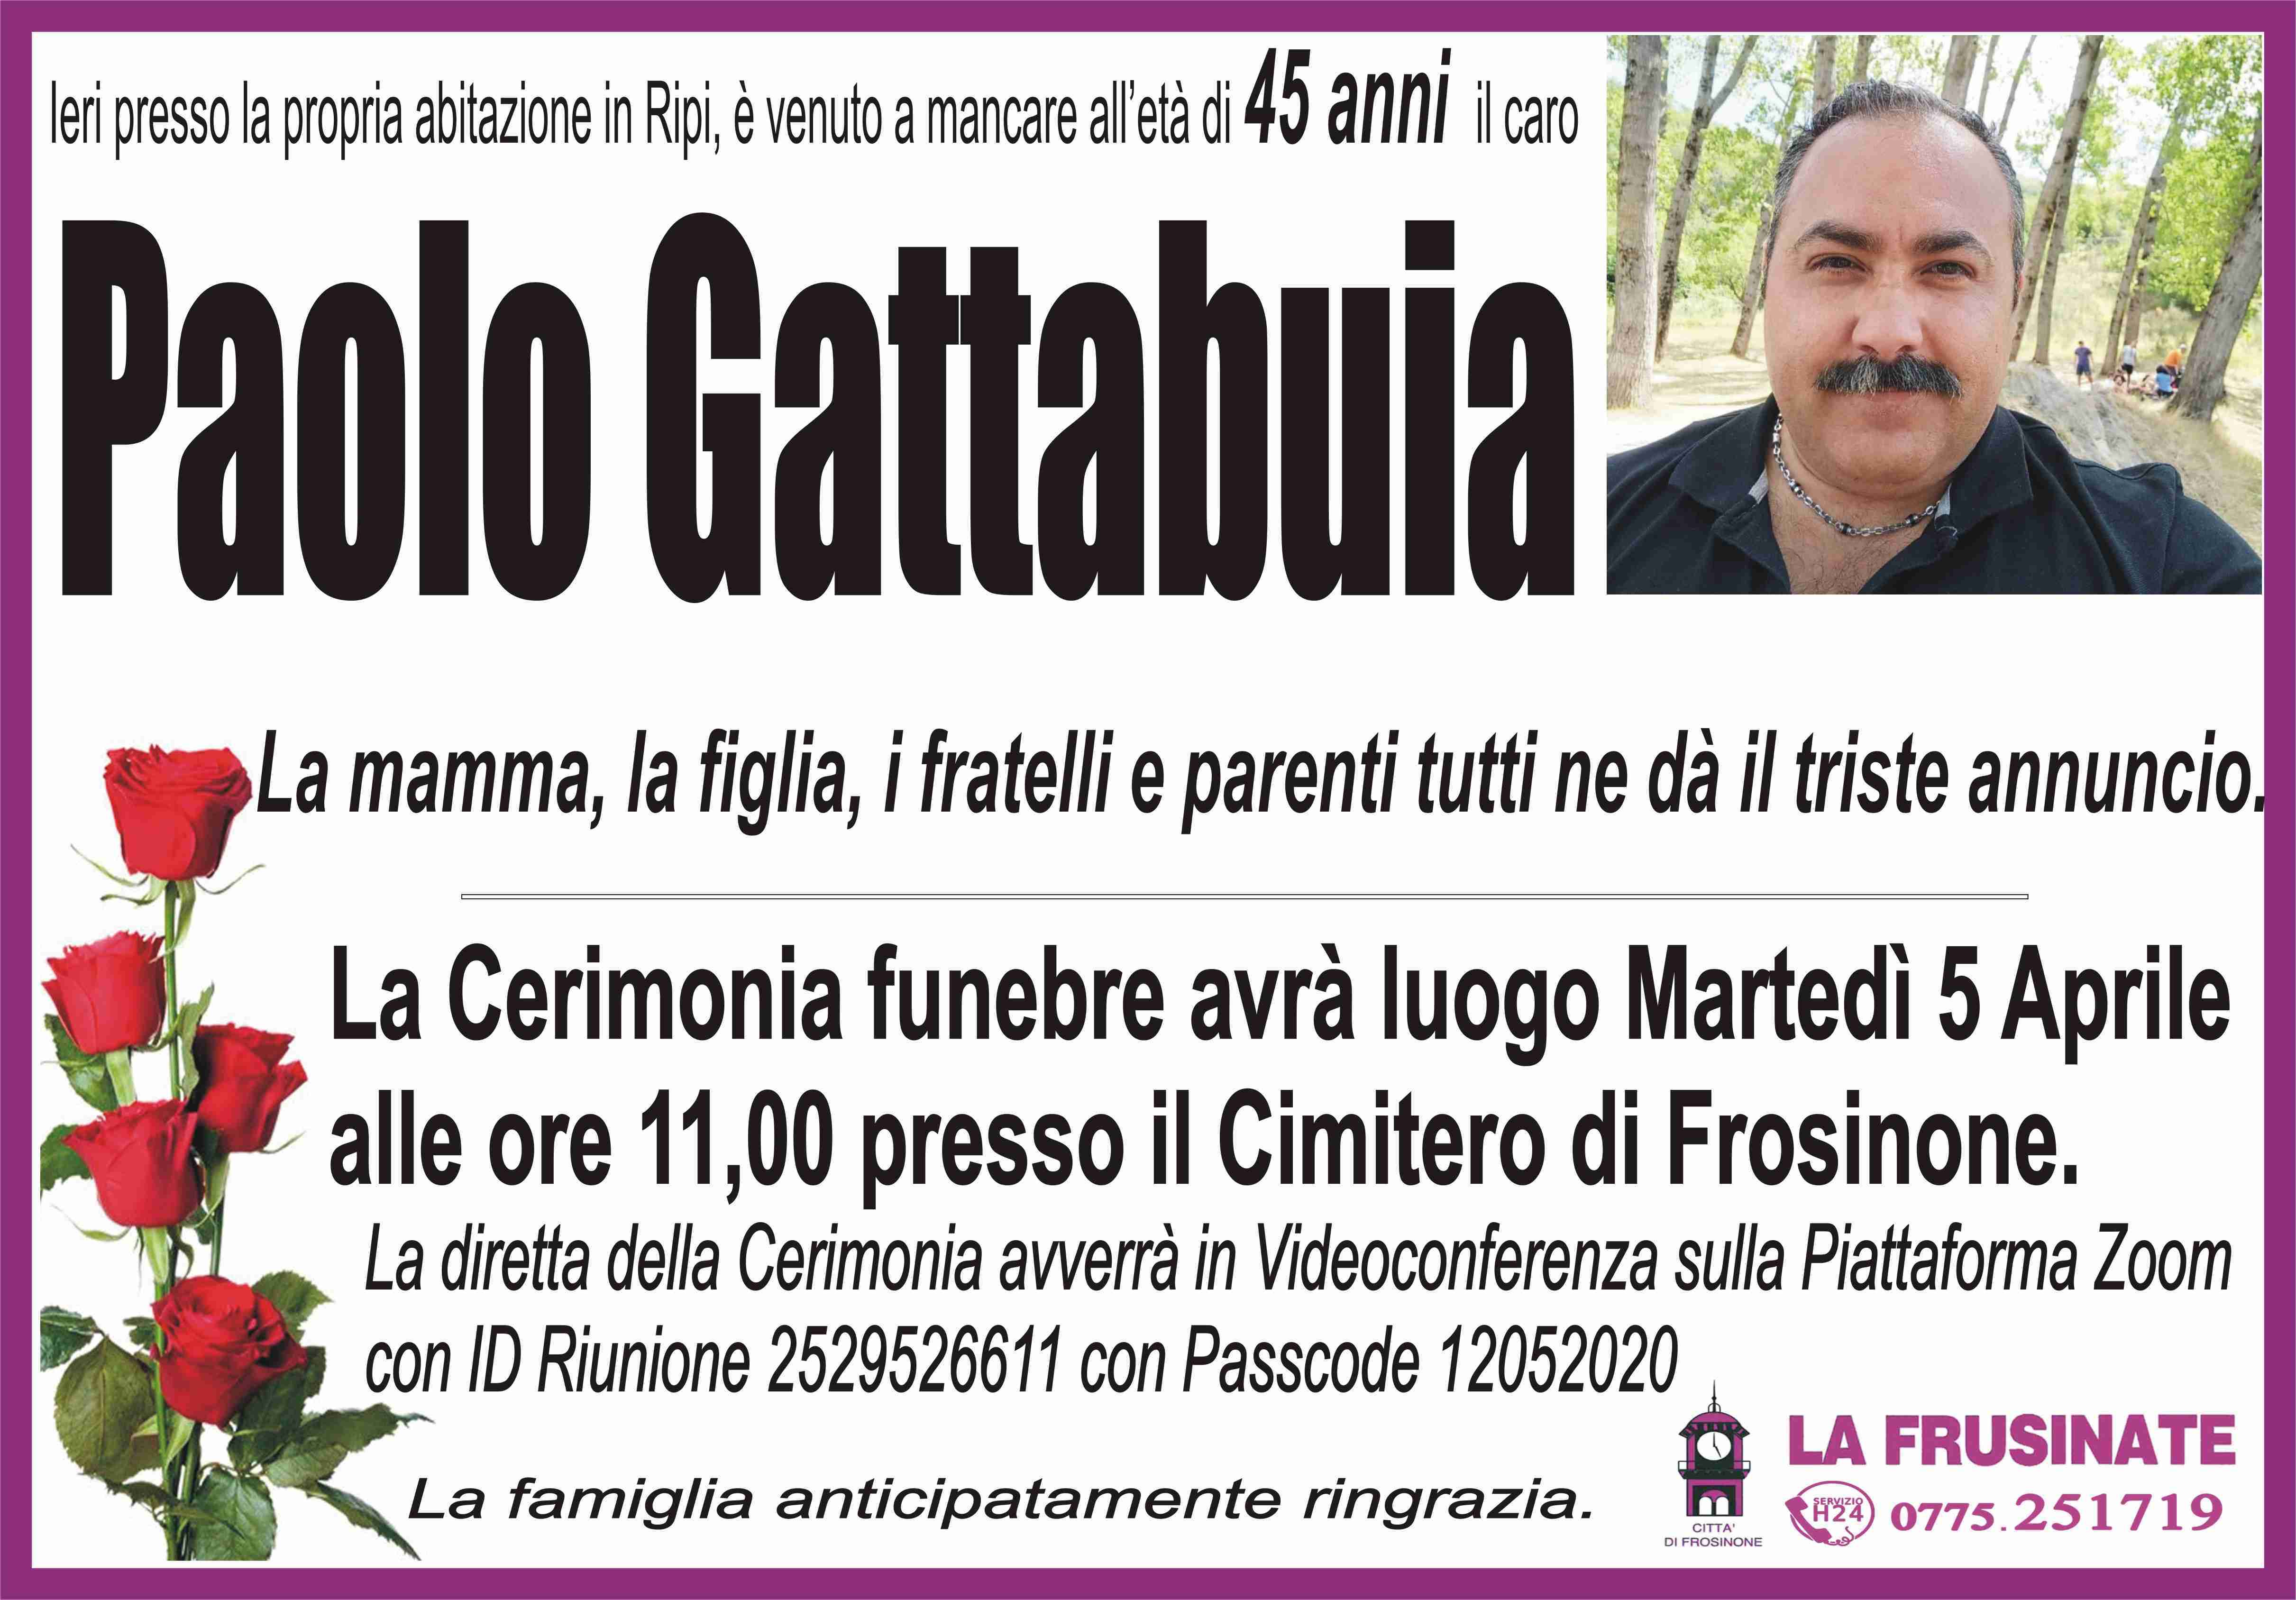 Paolo Gattabuia